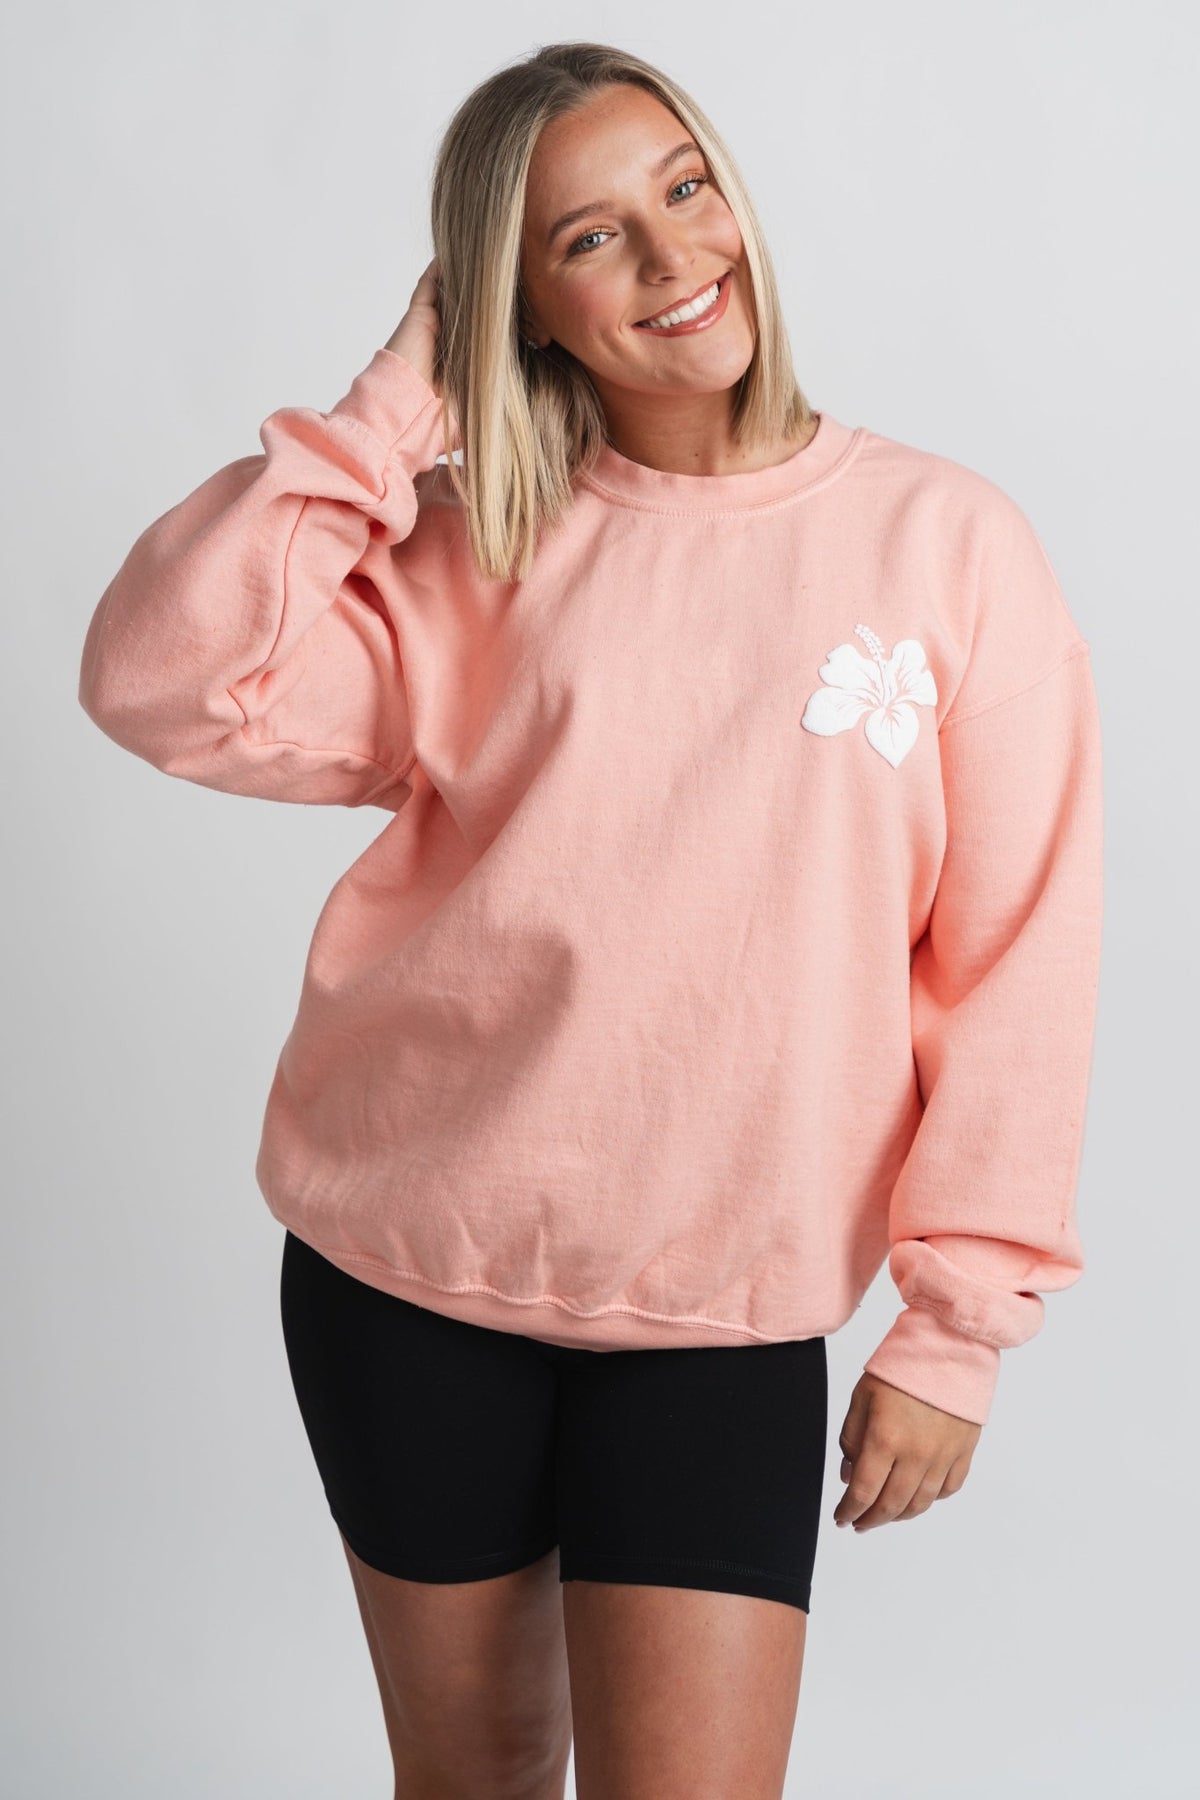 Something good sweatshirt desert flower - Trendy Sweatshirt - Cute Loungewear Collection at Lush Fashion Lounge Boutique in Oklahoma City